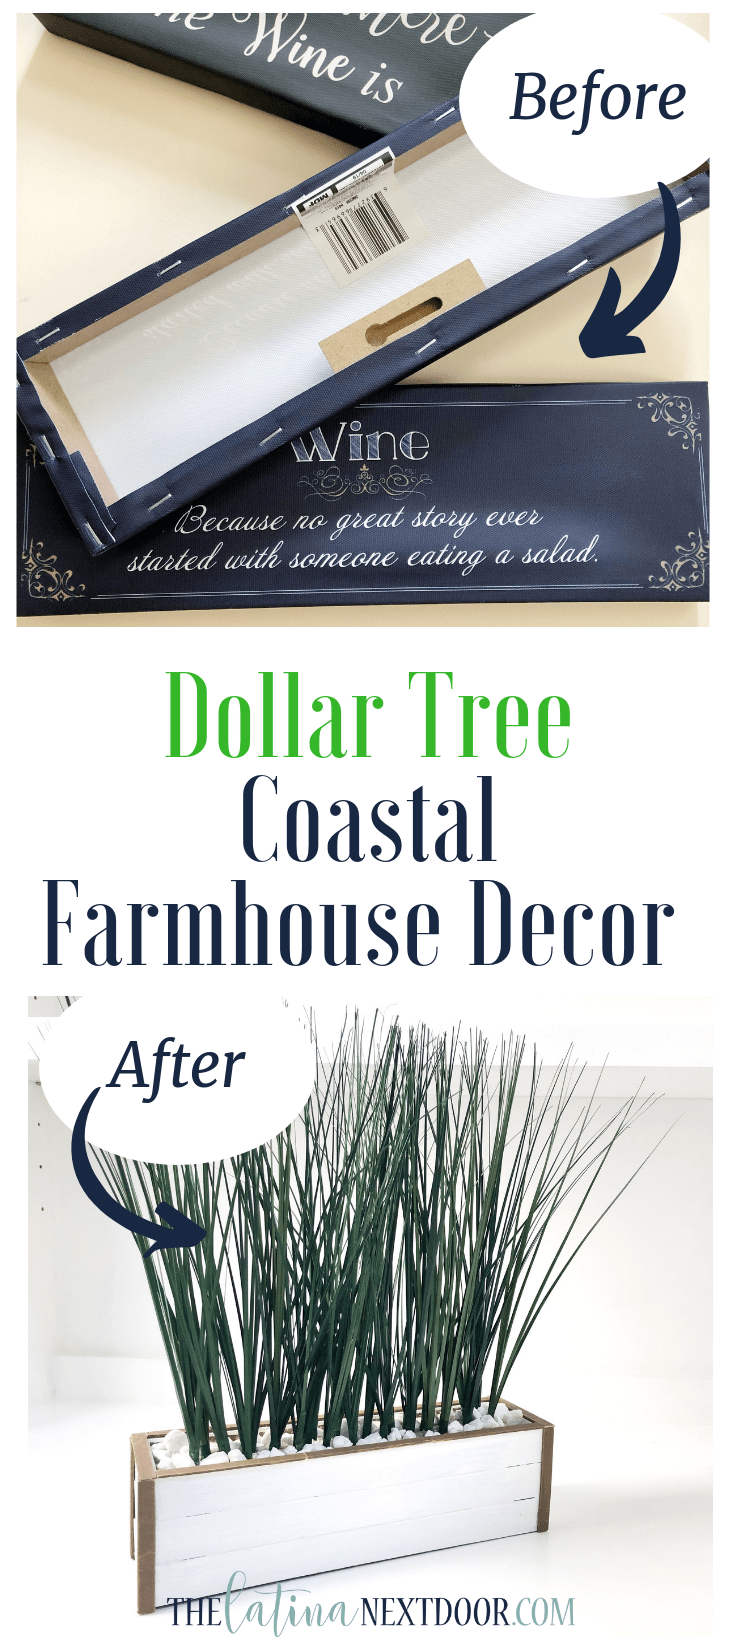 DIY Dollar Tree Coastal Farmhouse Decor - The Latina Next Door - DIY Dollar Tree Coastal Farmhouse Decor - The Latina Next Door -   15 diy Dollar Tree farmhouse ideas